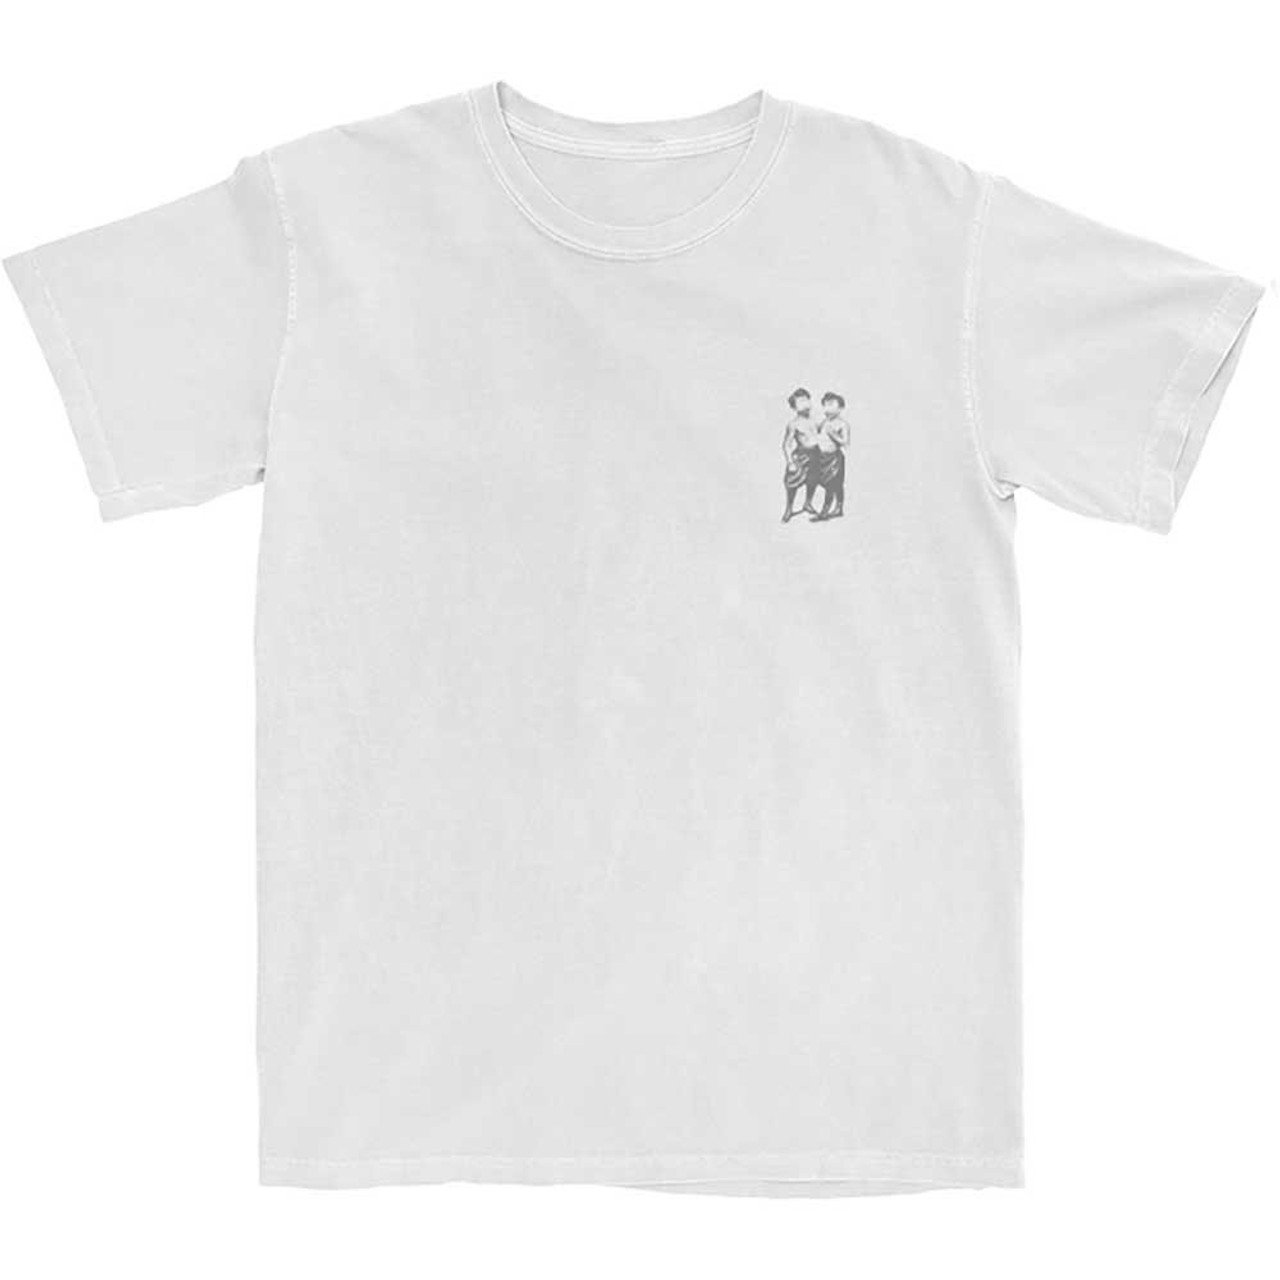 Korn 'Requiem' (White) T-Shirt